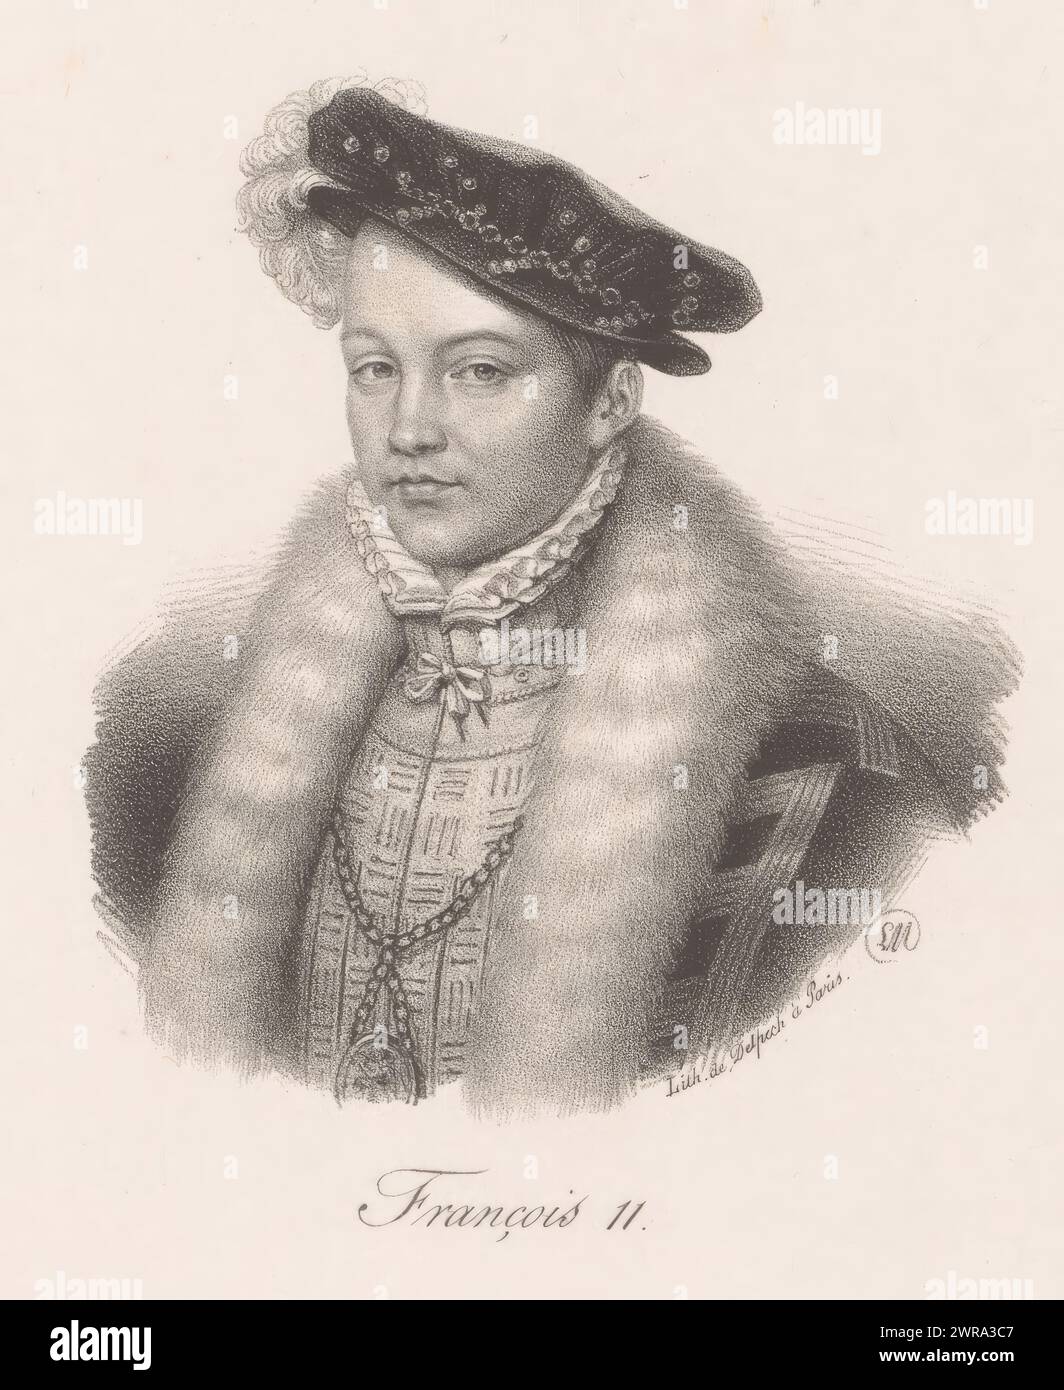 Portrait of Francis II, King of France, François II (title on object), print maker: Nicolas Maurin, printer: veuve Delpech (Naudet), Paris, 1825 - 1842, paper, height 268 mm × width 177 mm, print Stock Photo